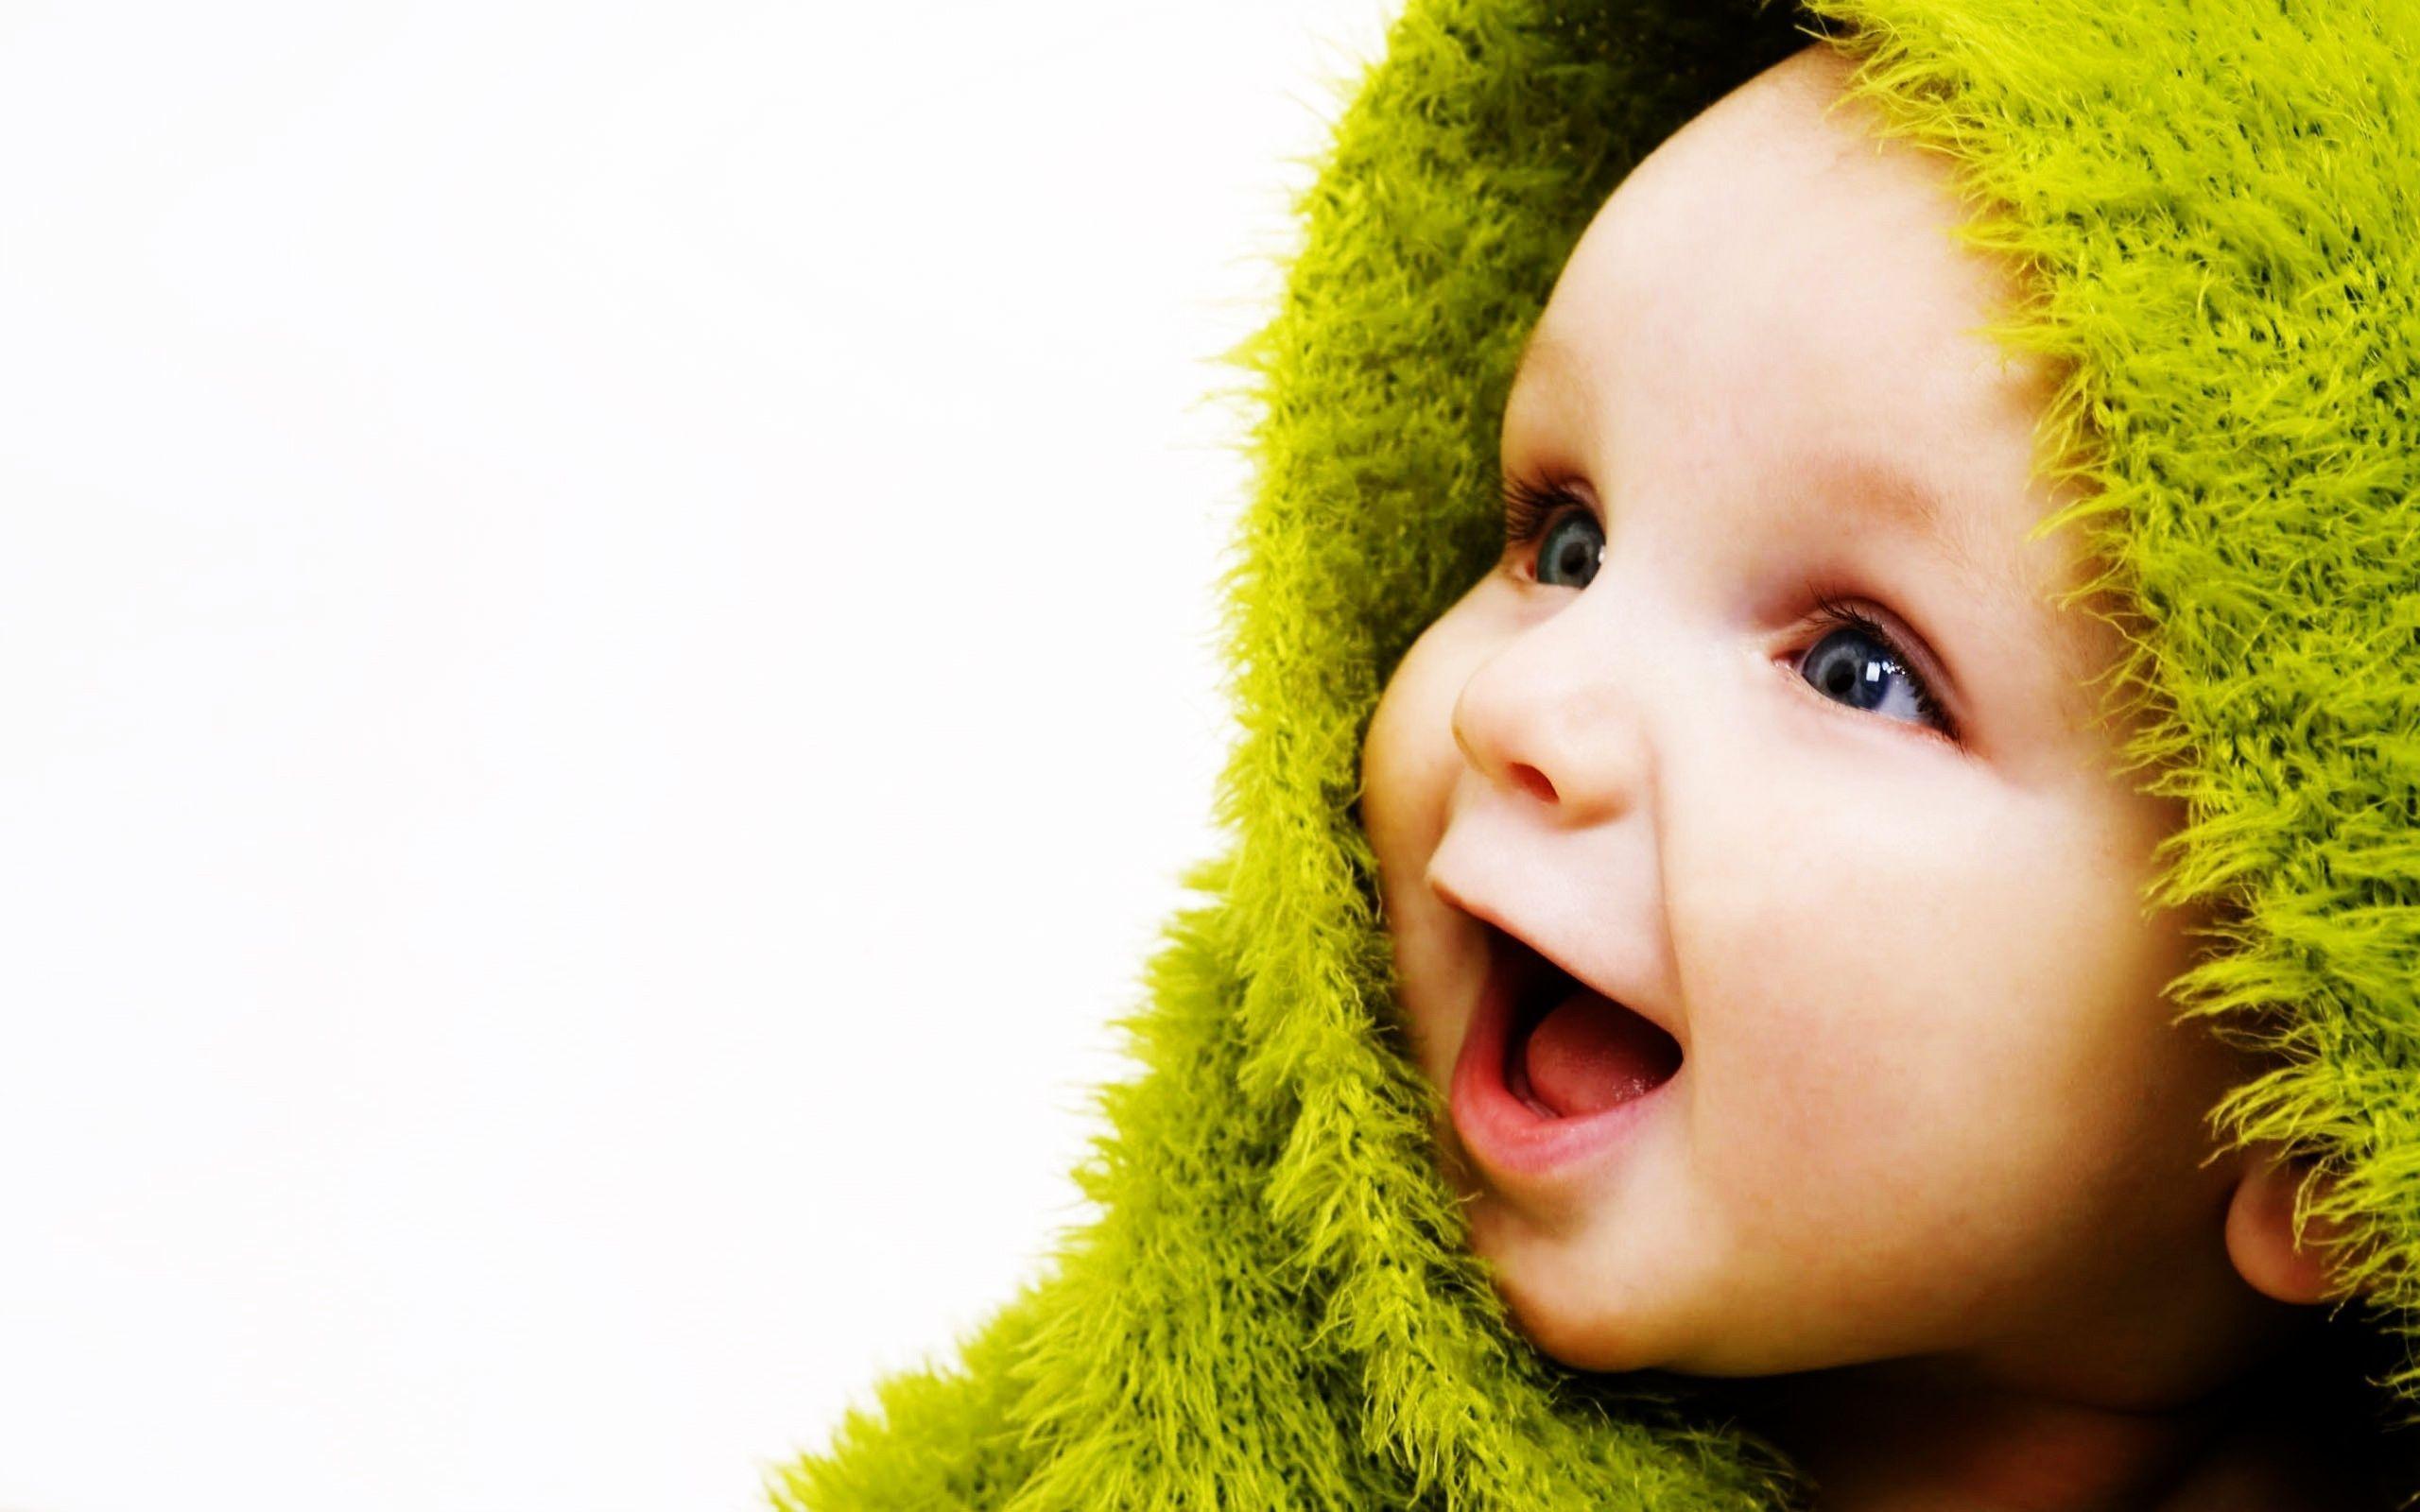 Cute Baby HD Cute Baby Background For Desktop Cute 800x600px high